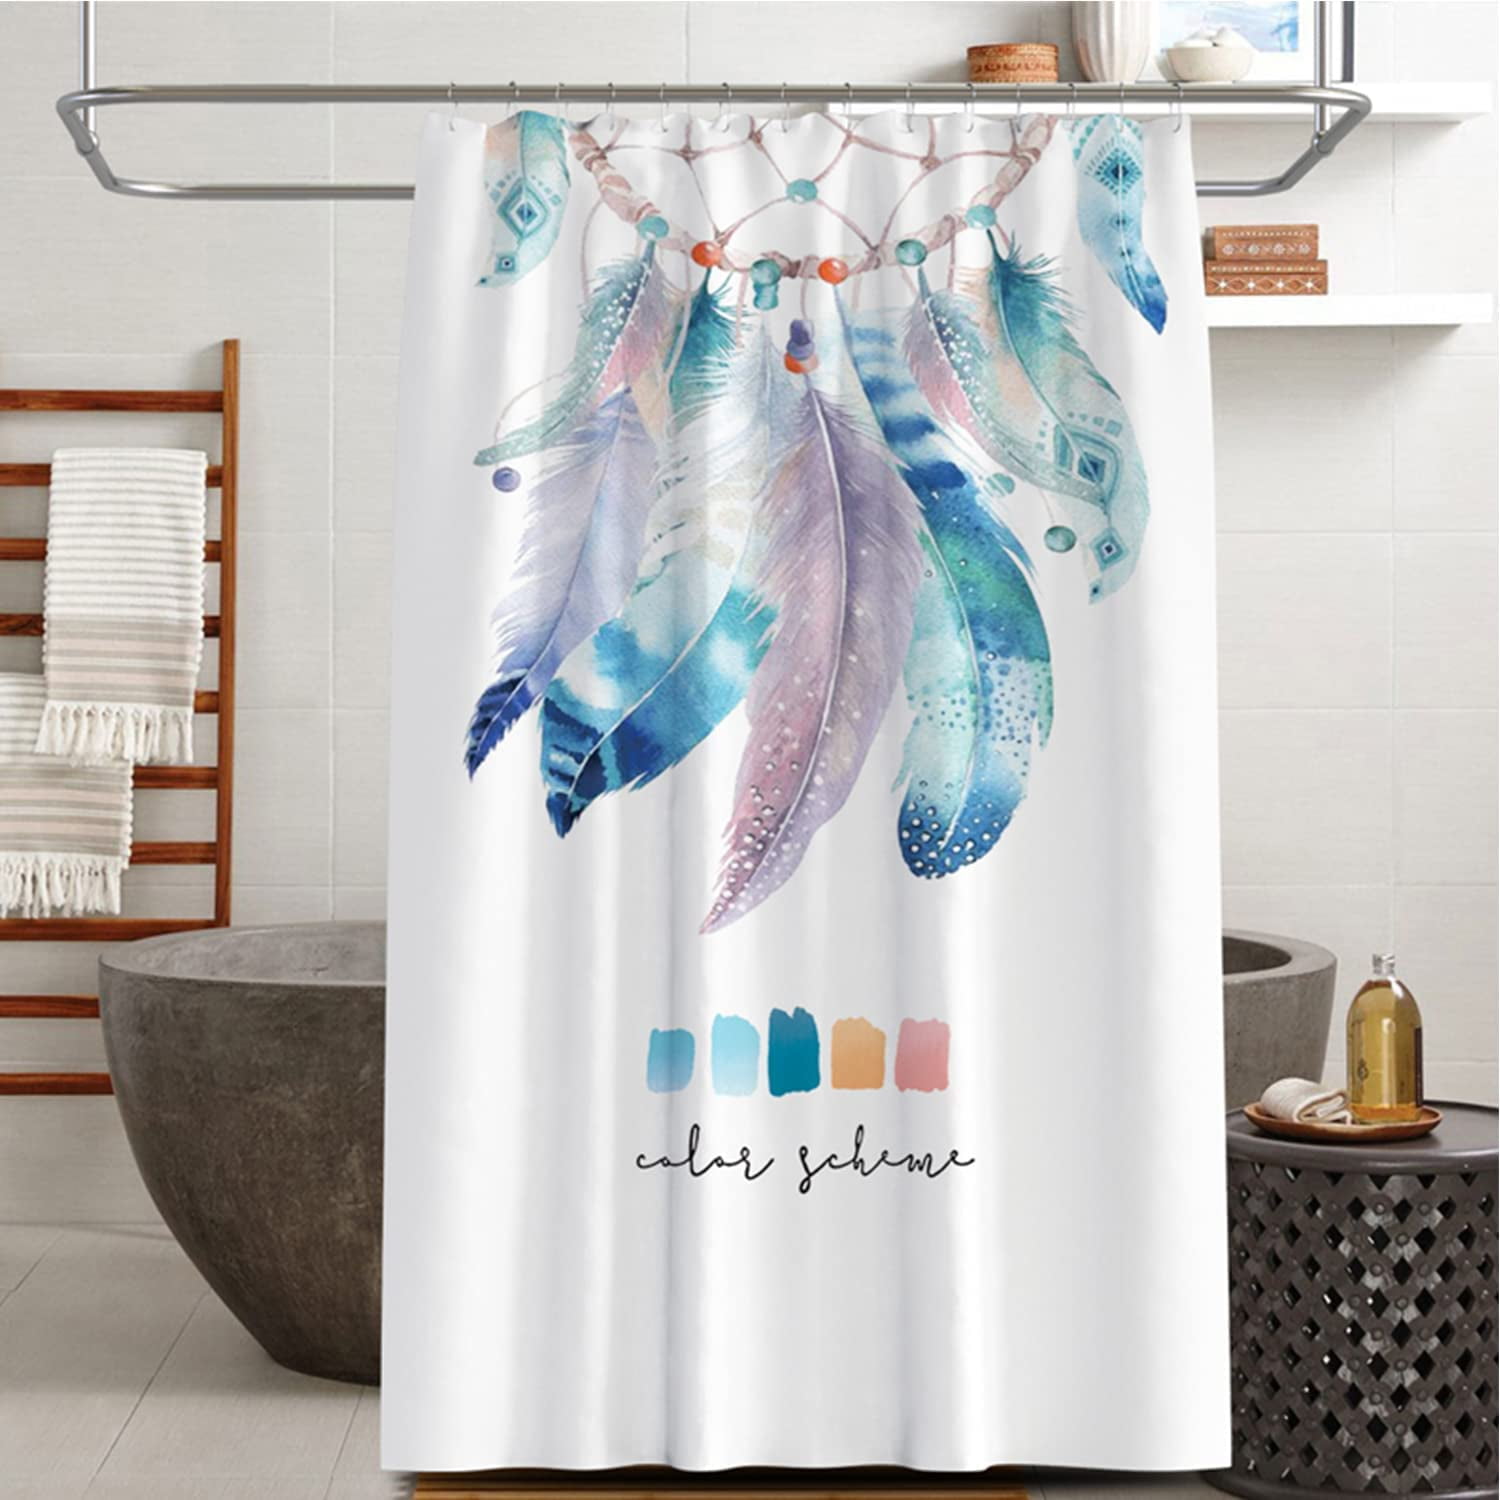 Anti-Mould Different Designs Bathroom Bath Panel Curtain Digitally Printed Shower Curtain With Curtain Rings 180 x 200 cm Beach 